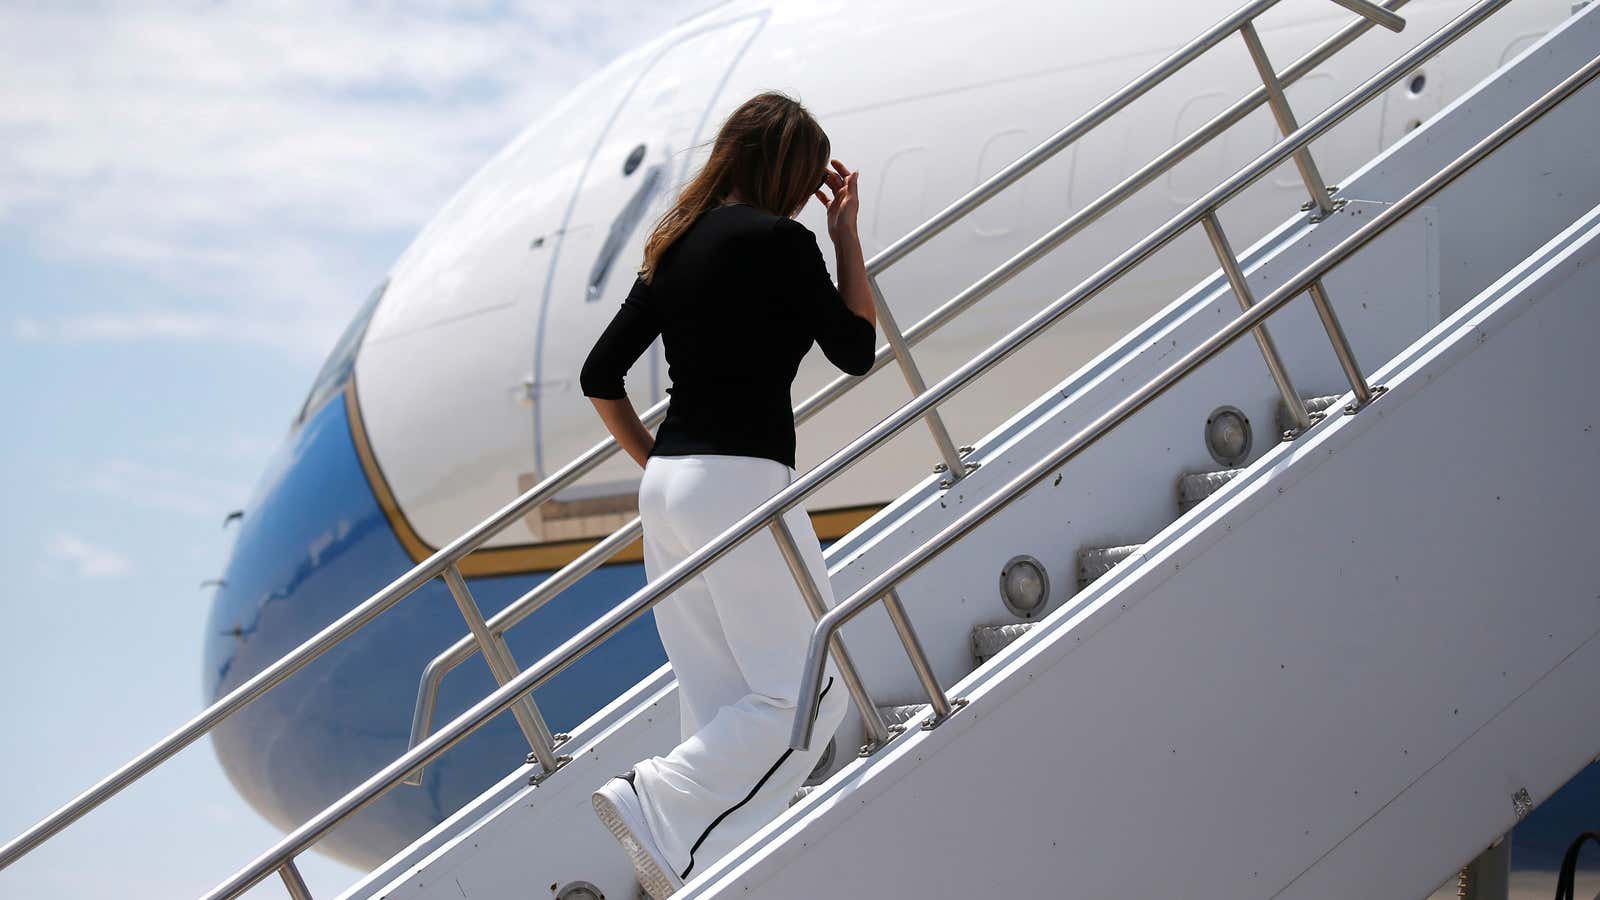 Melania Trump boards a flight in June.